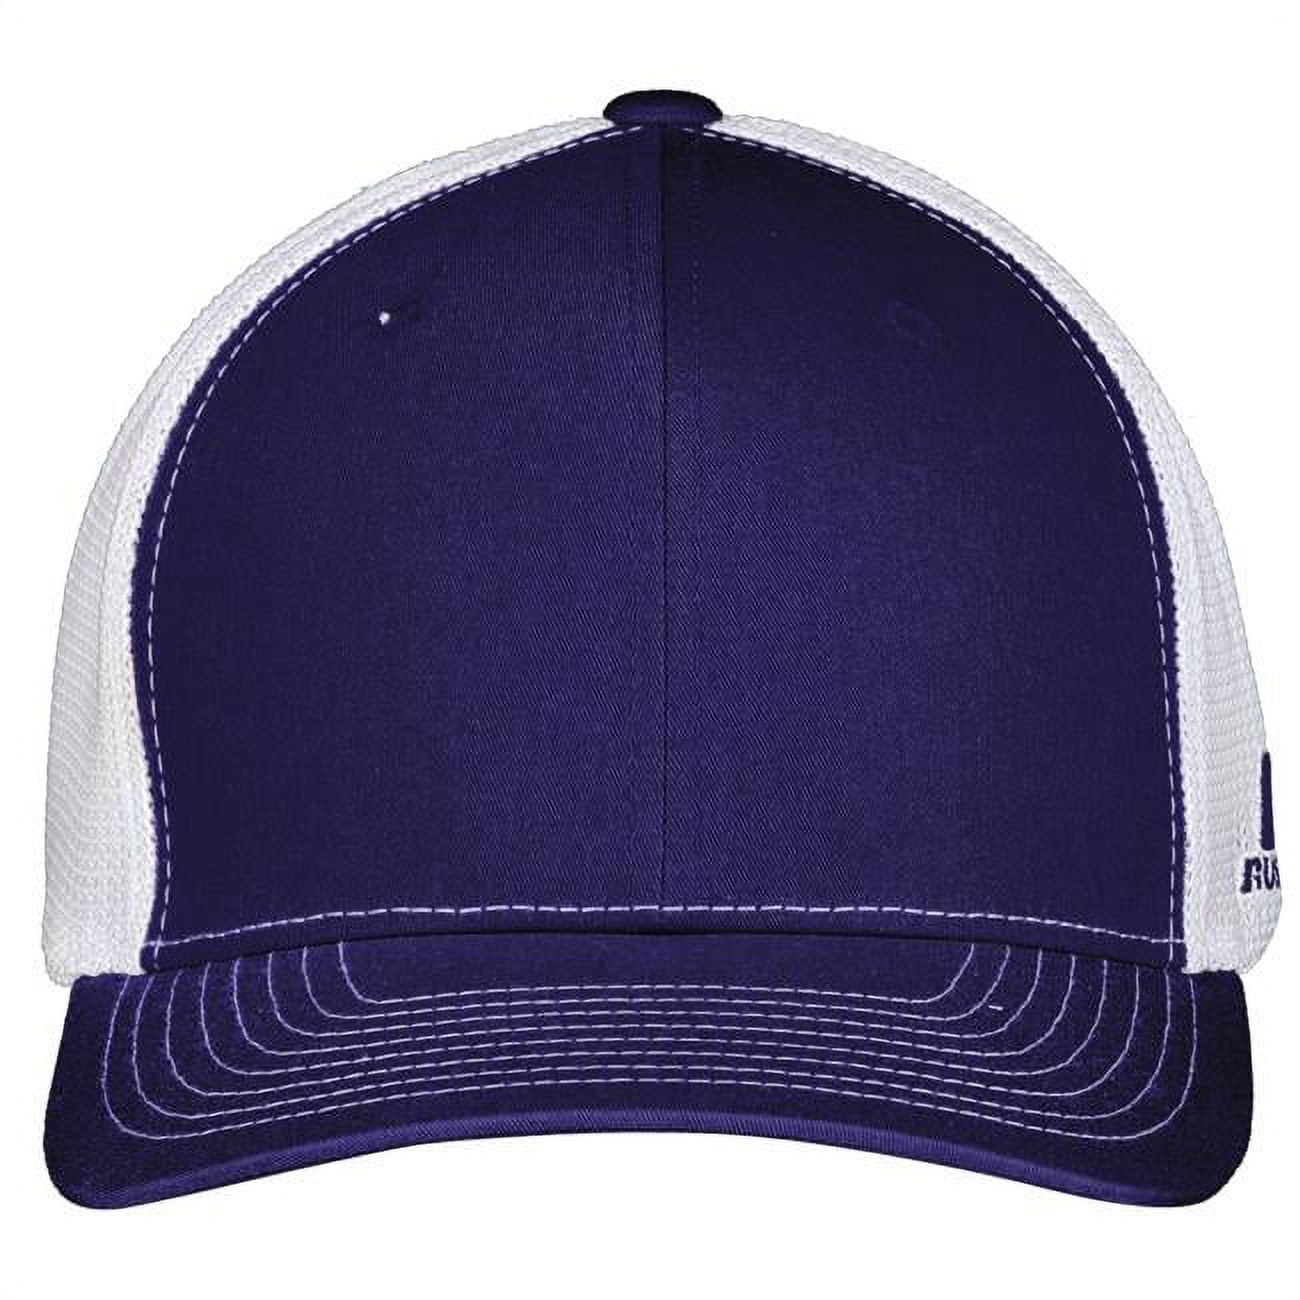 Youth Flexfit White Mesh One Purple Twill - Size Cap, 